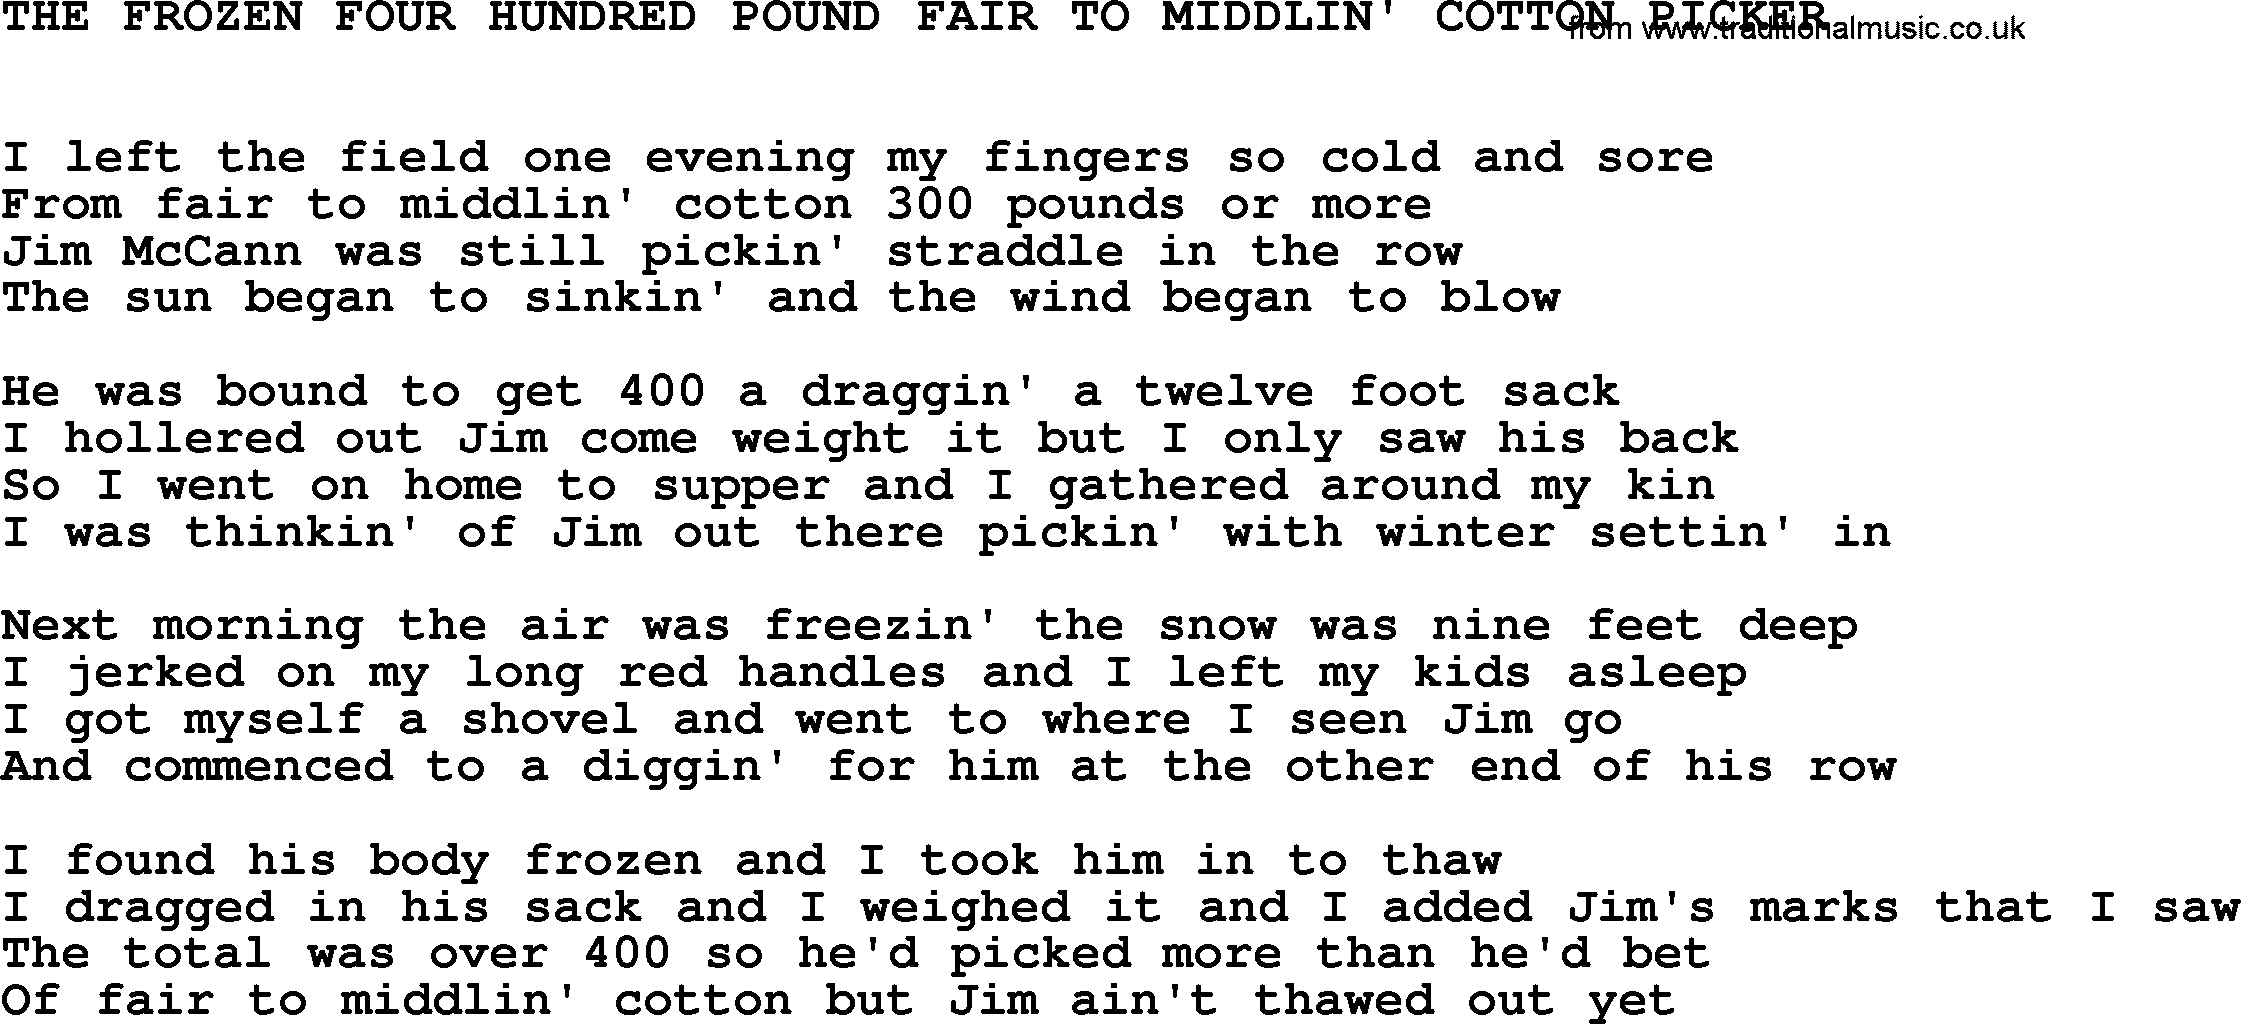 Johnny Cash song The Frozen Four Hundred Pound Fair To Middlin' Cotton Picker.txt lyrics